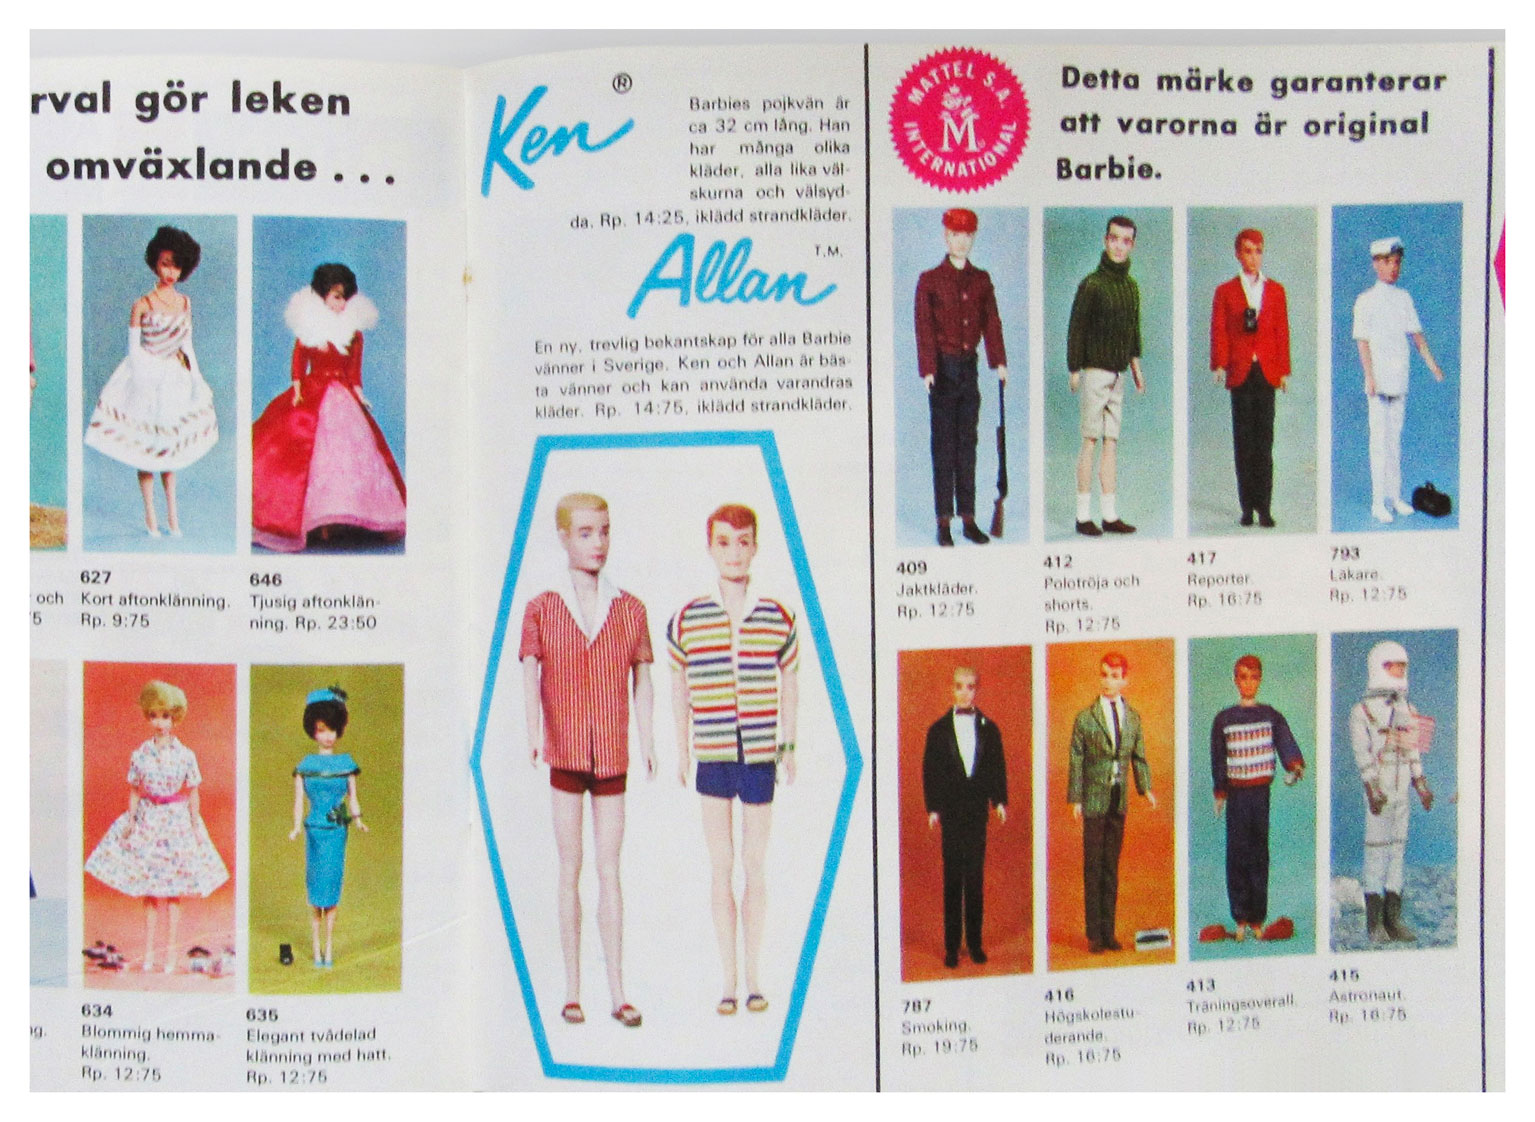 From 1965 Swedish Leksakslandet catalogue